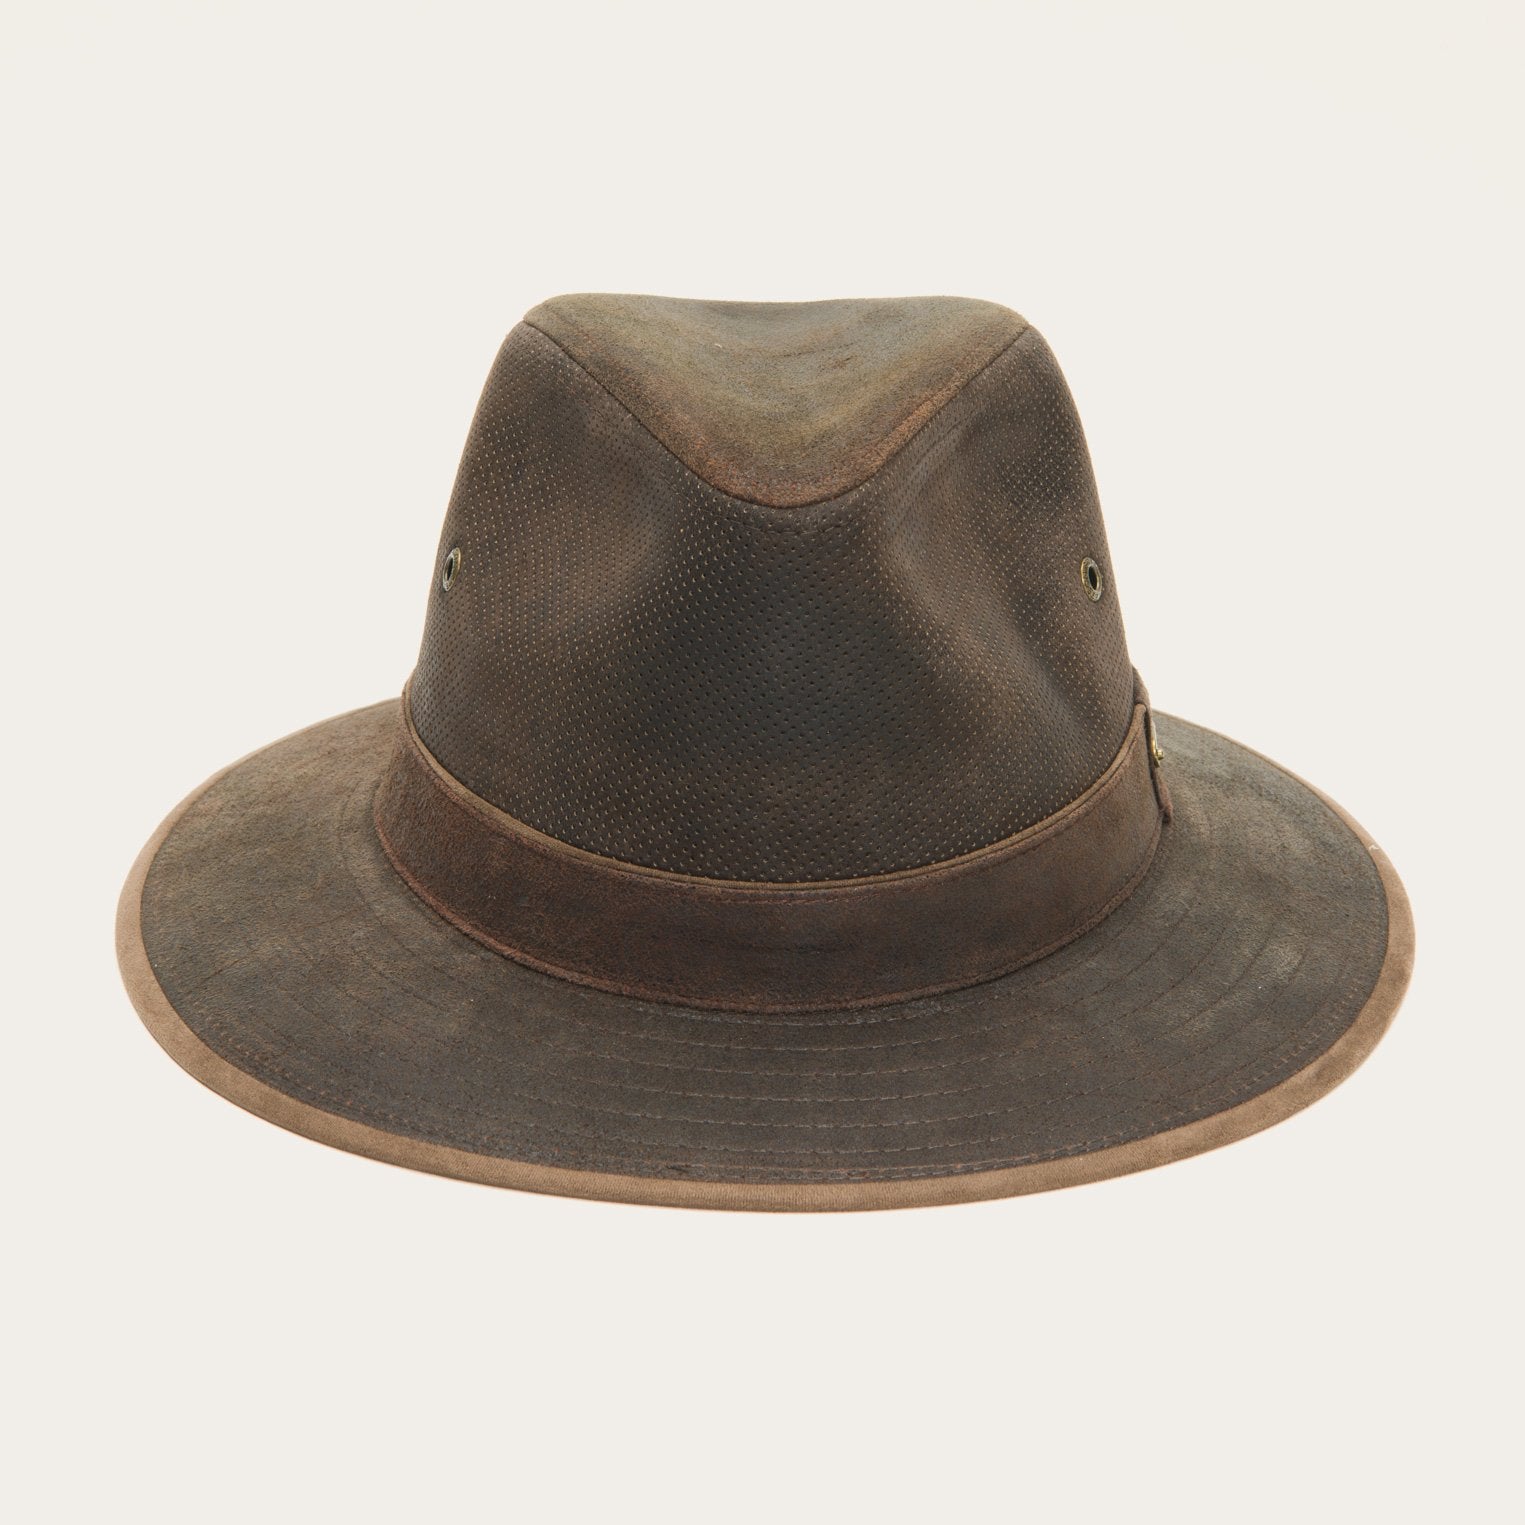 STETSON Weathered Leather Safari Hat